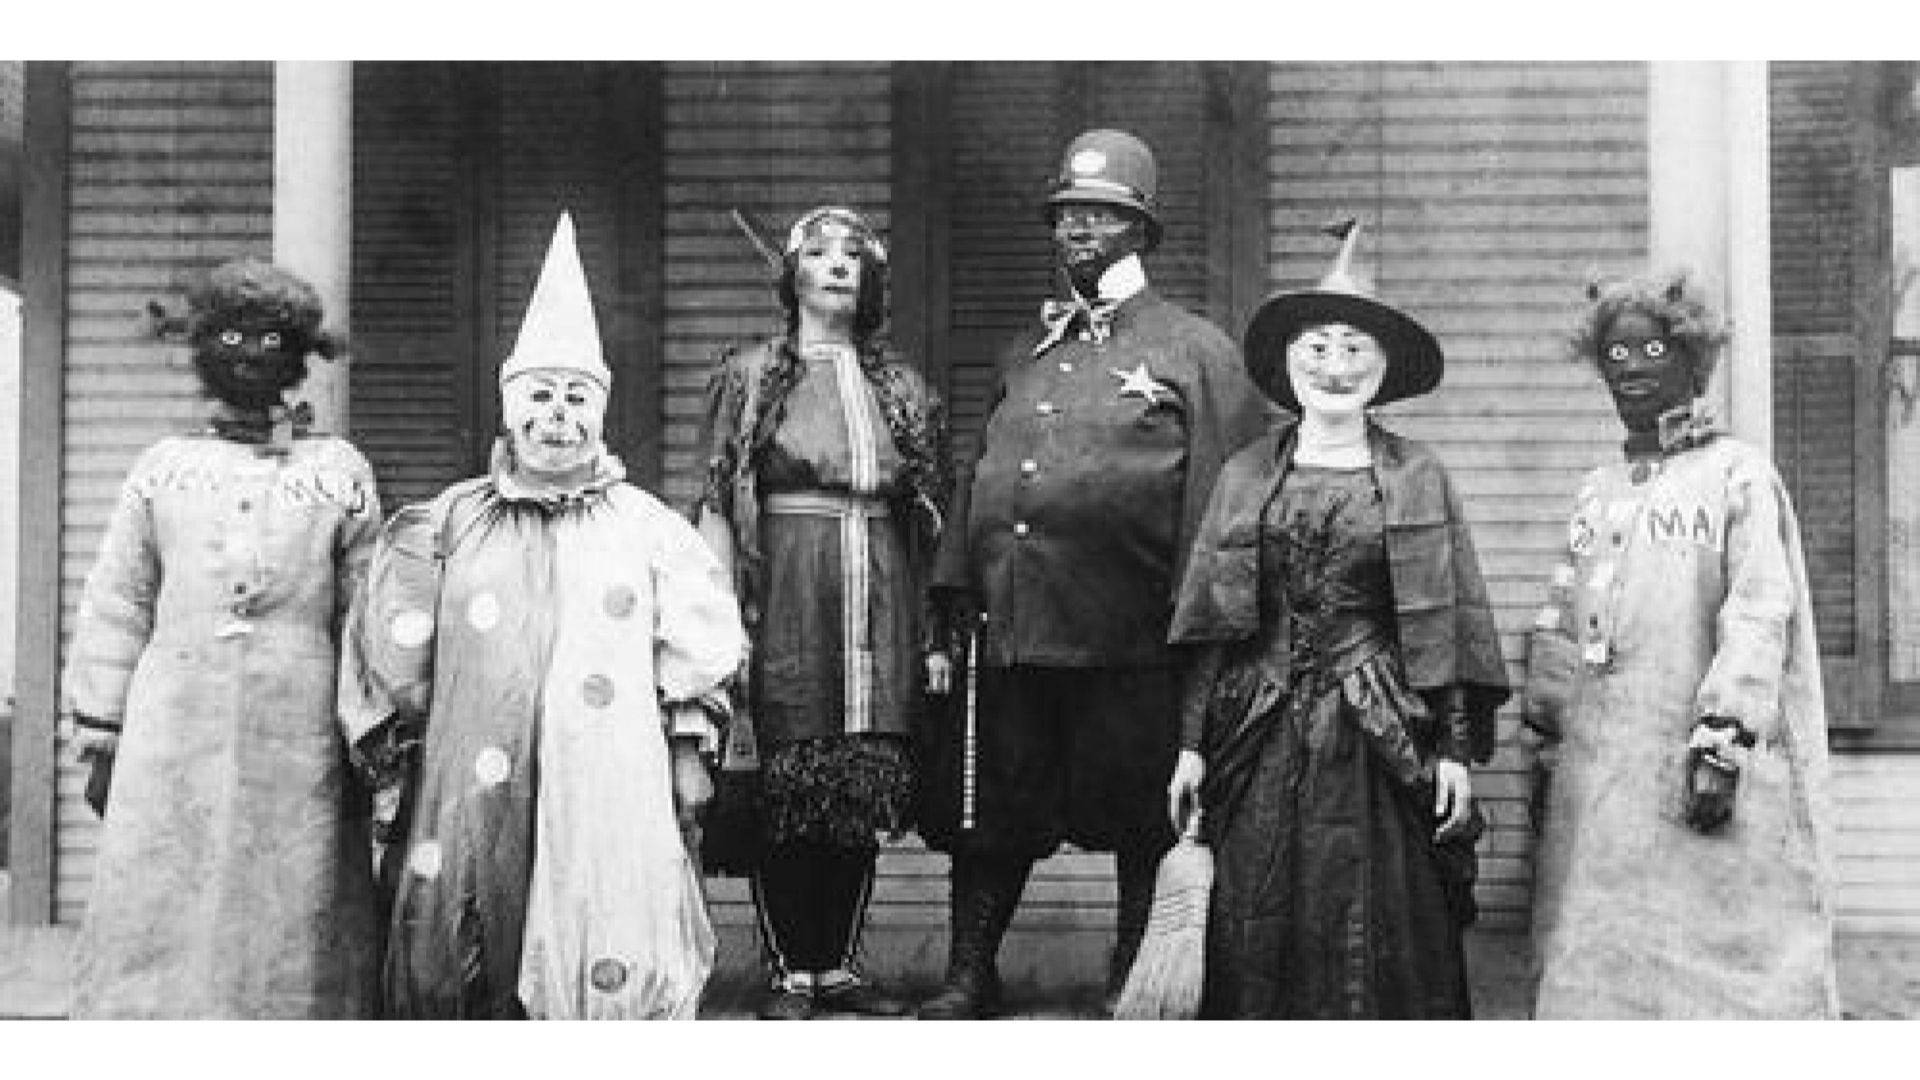 Vintage Halloween Costumes Background